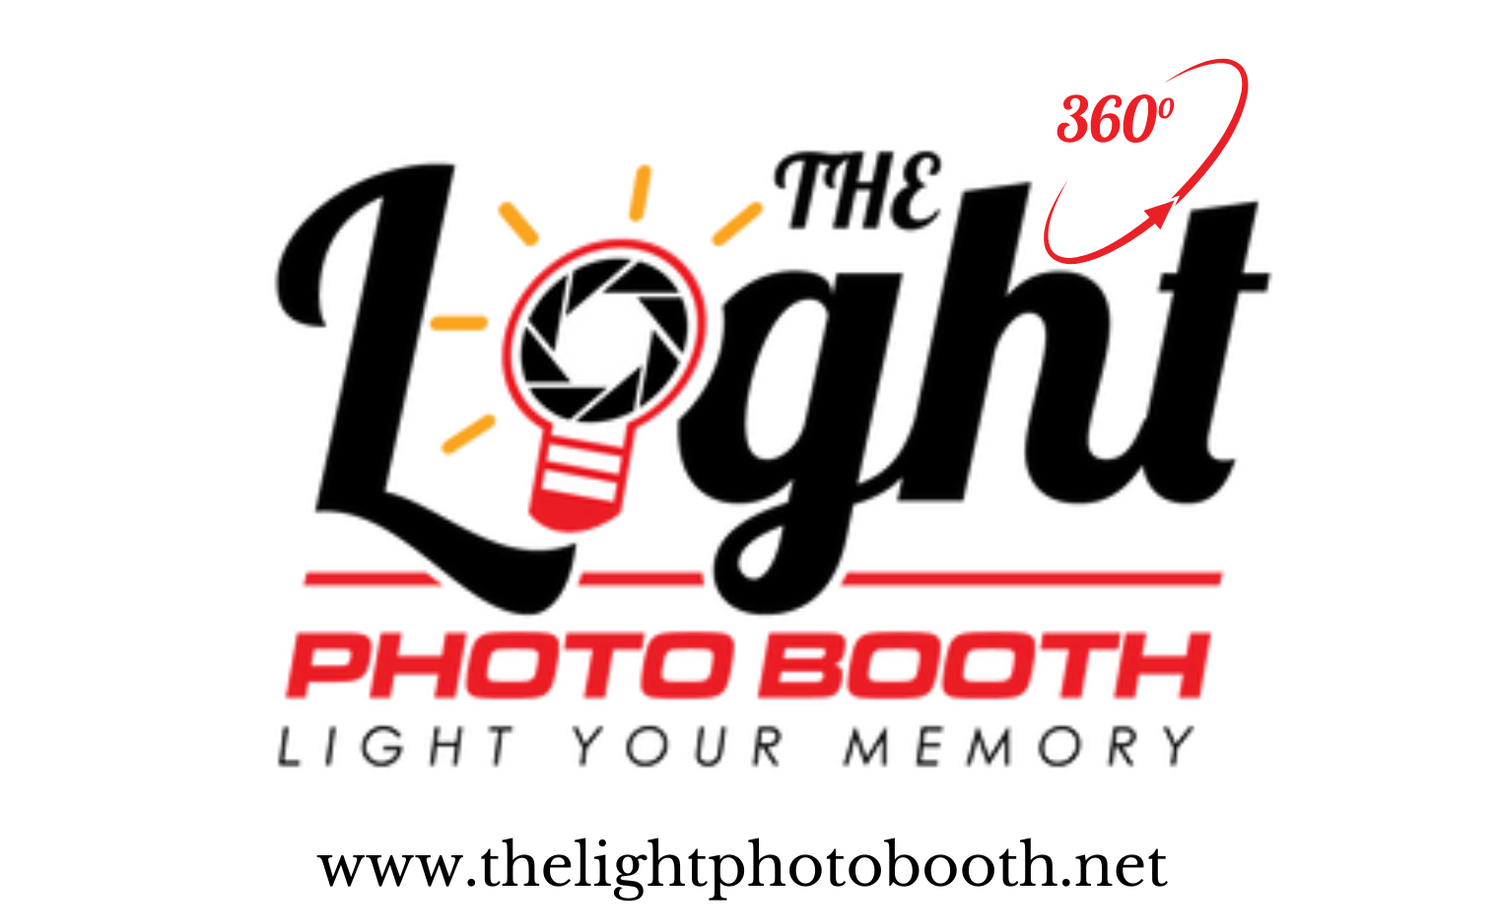 The Light PhotoBooth